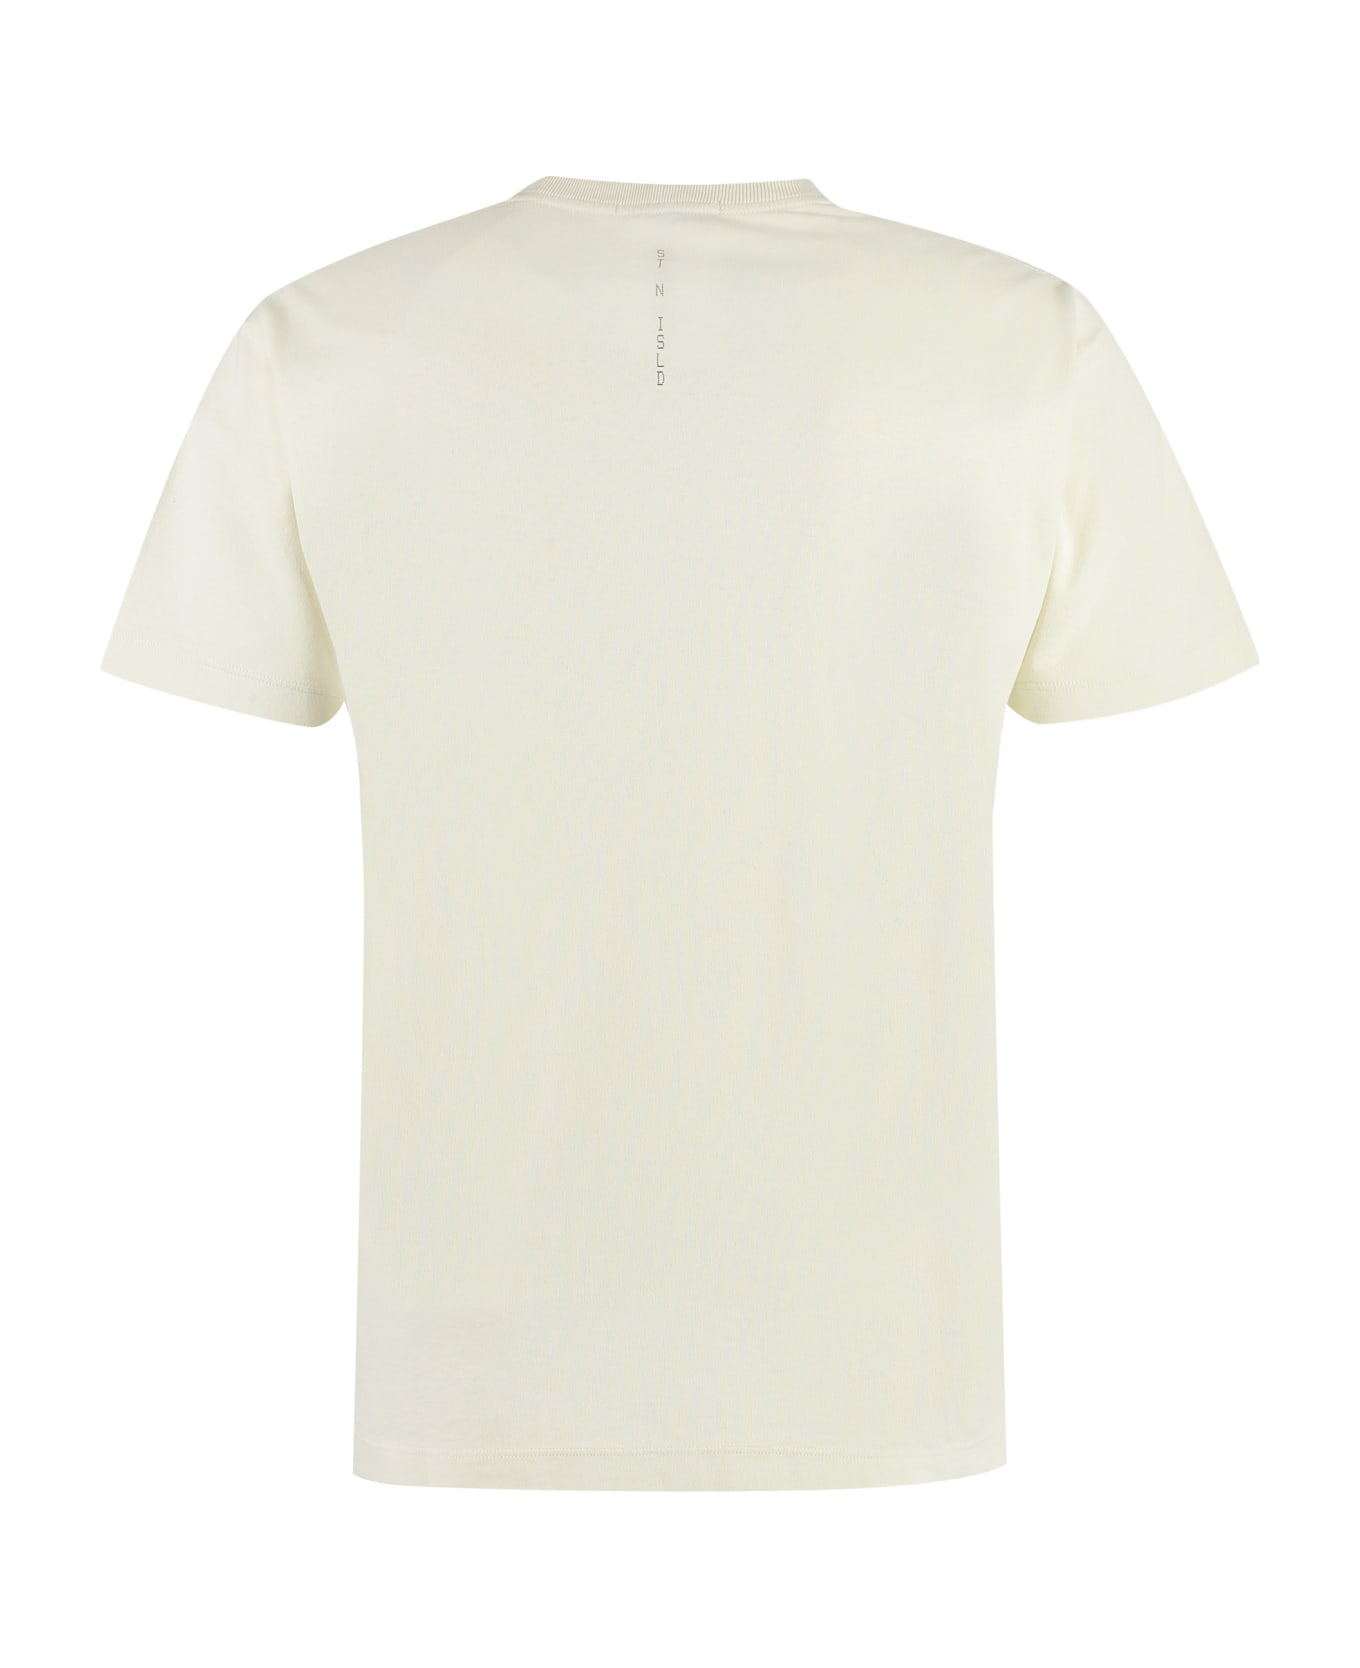 Stone Island Cotton Crewneck T-shirt - Ivory シャツ